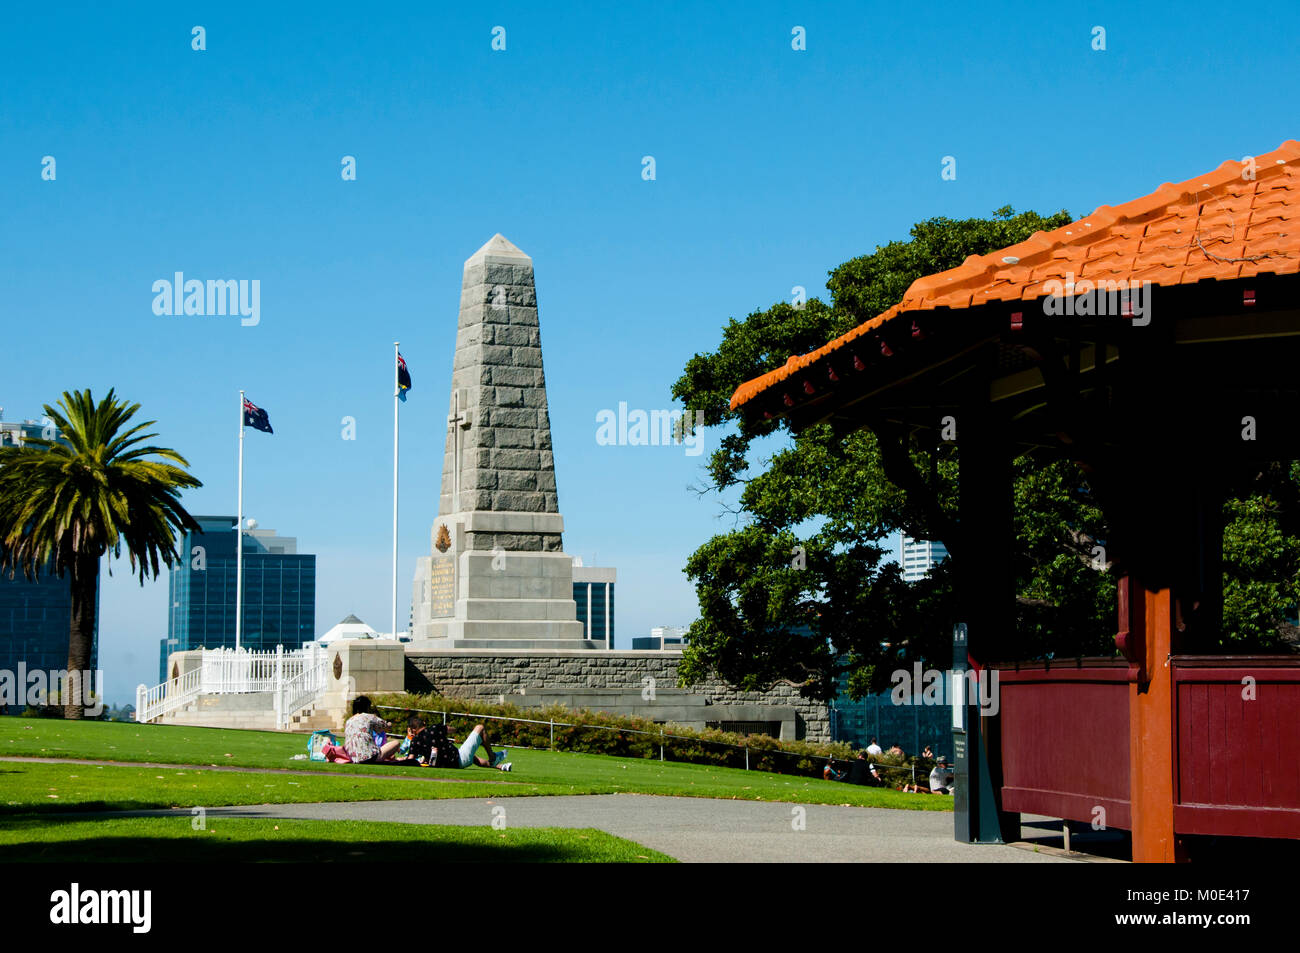 Iconic Pavillon im Kings Park, Perth - Australien Stockfoto